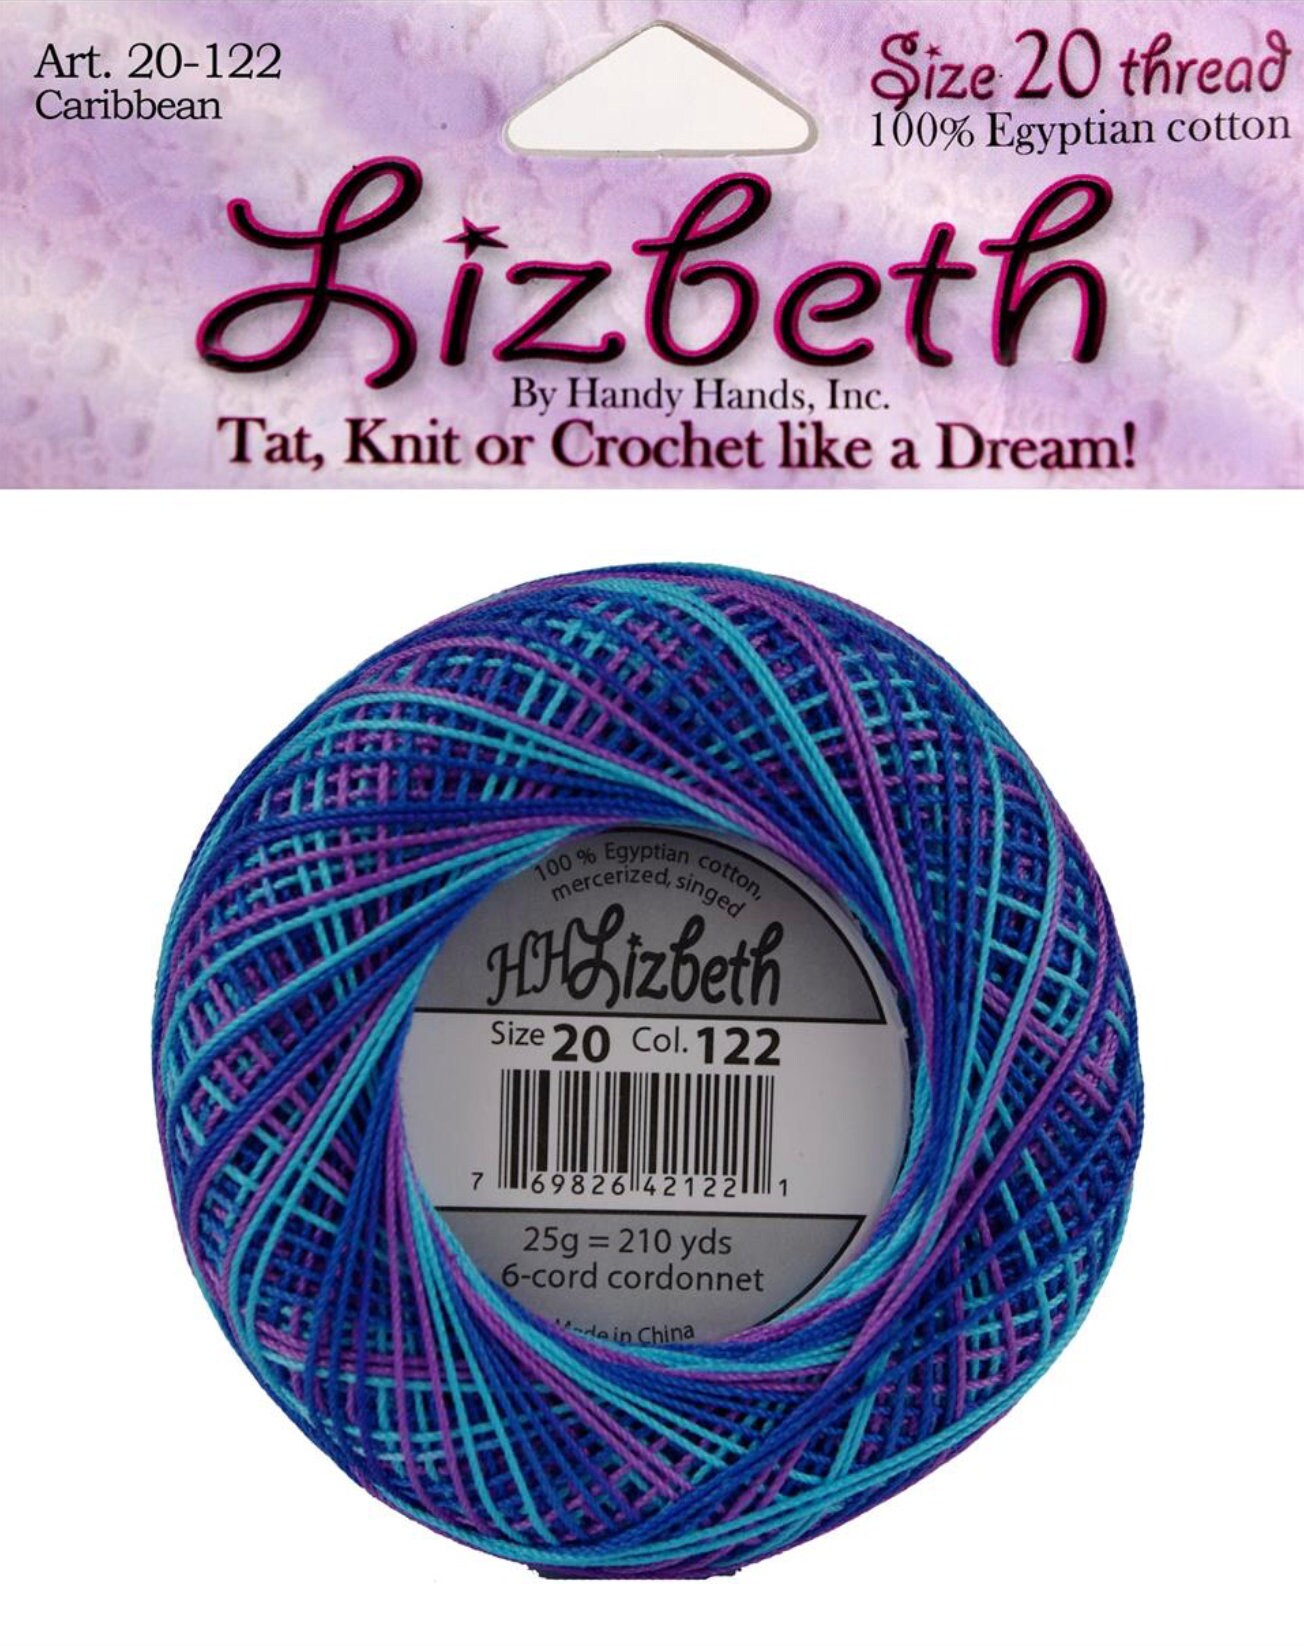 Handy Hands Lizbeth Cordonnet Cotton Size 20 Bright Turquoise Dark